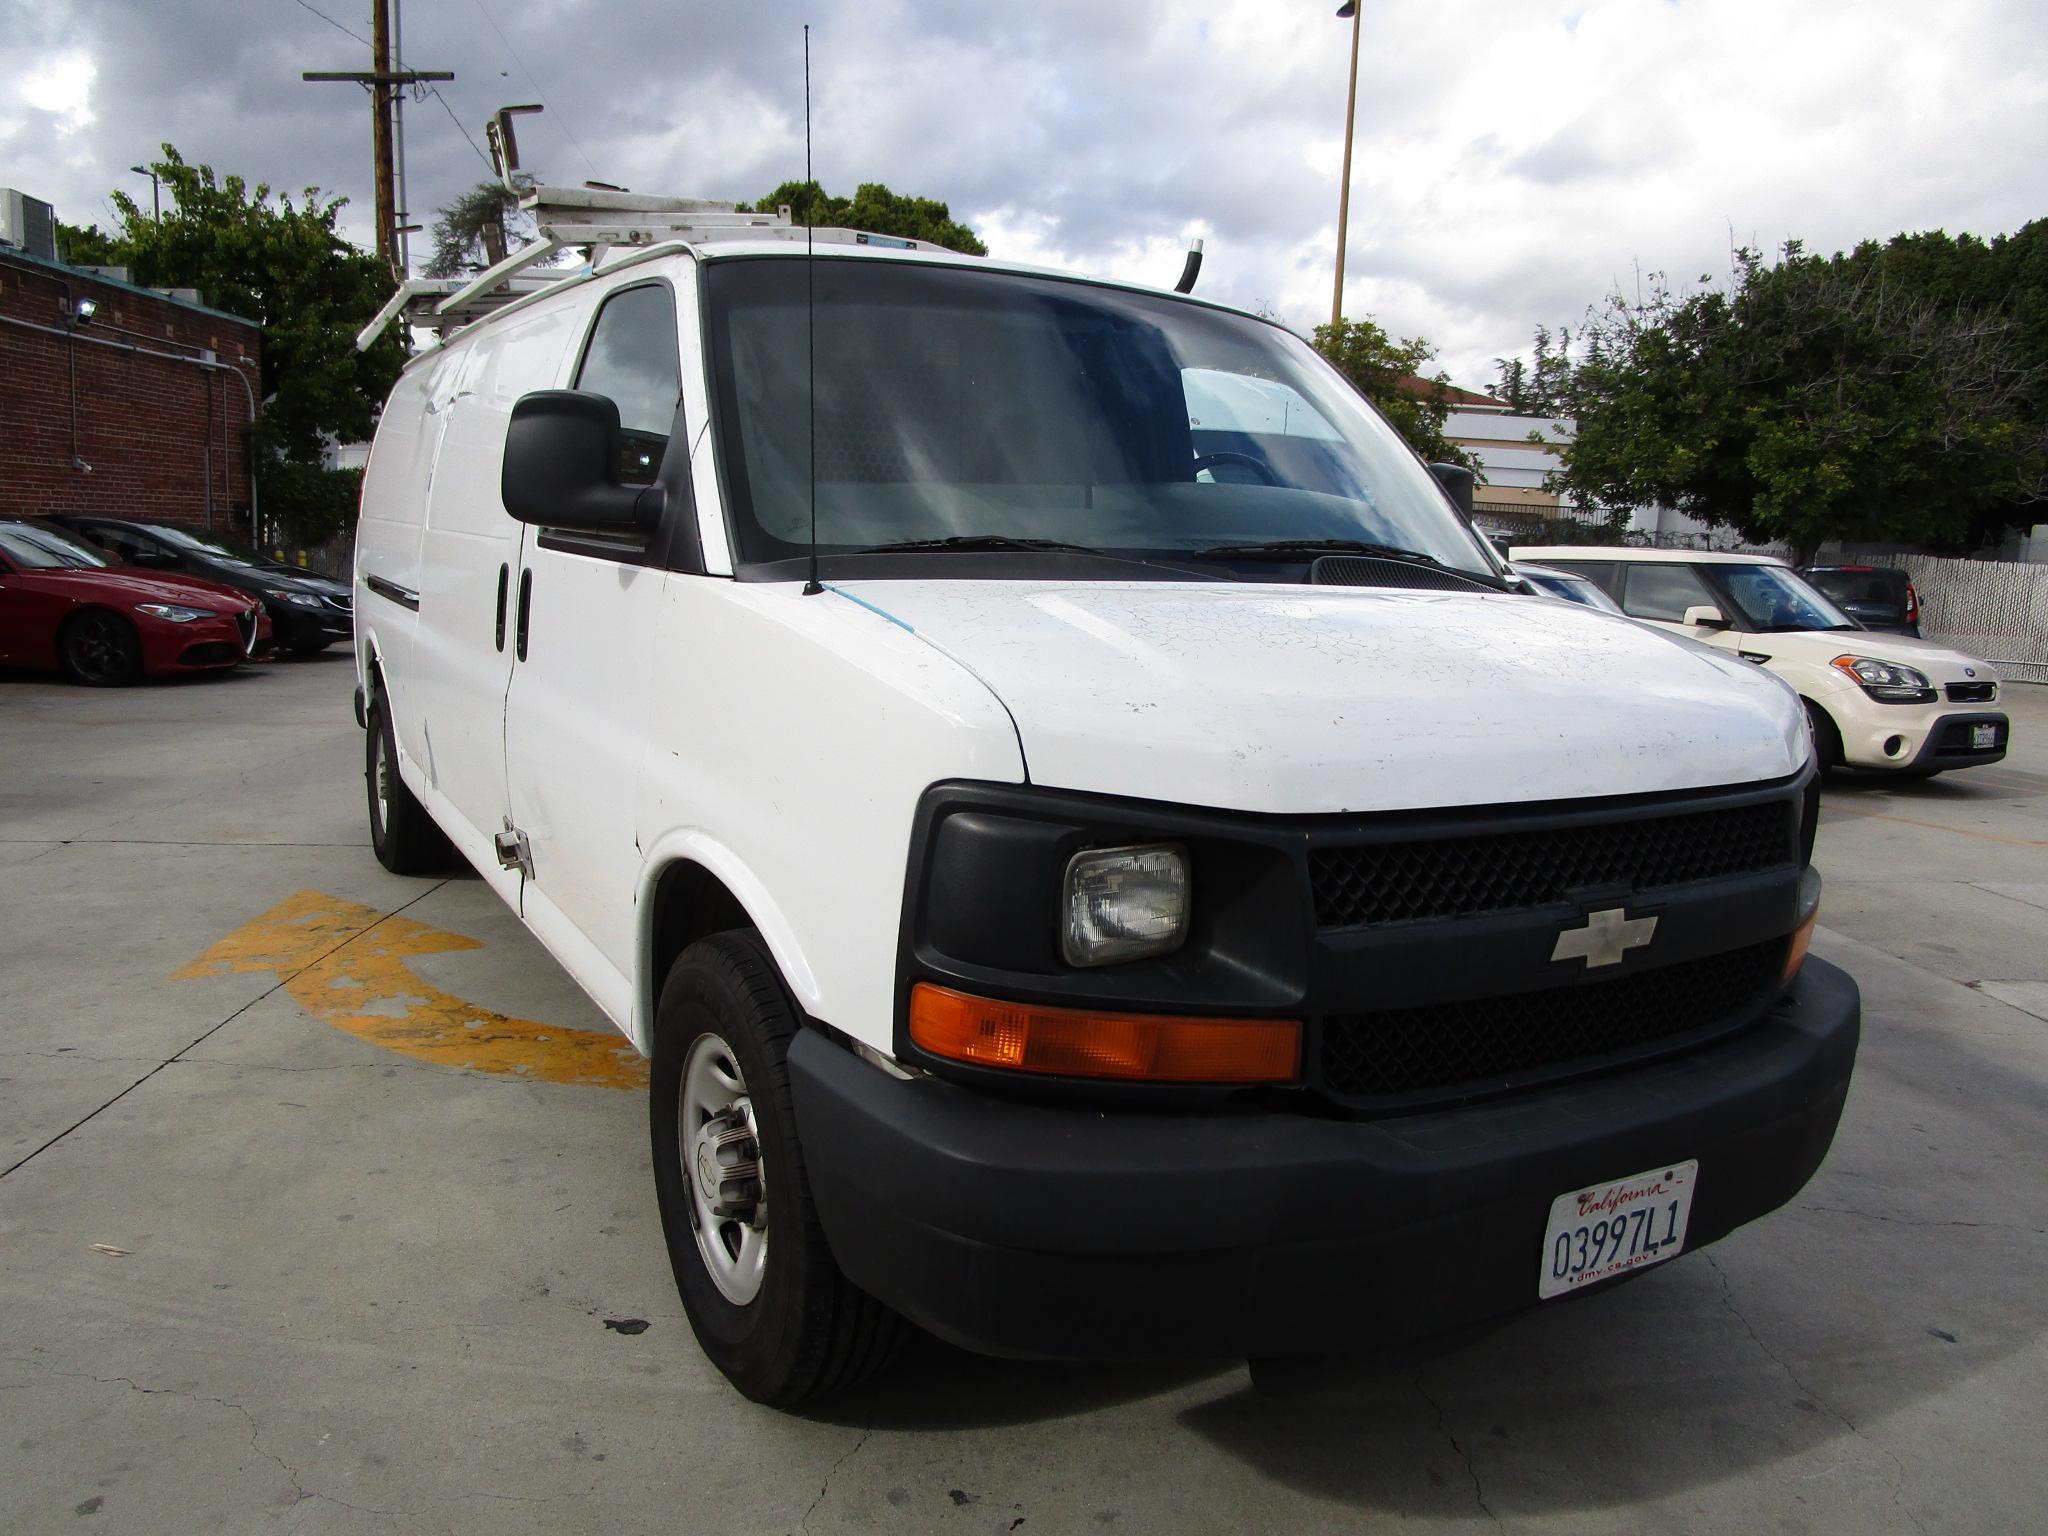 2005 Chevrolet G2500 Express Cargo Van - Gasoline 4.8L - 261,314 Miles - Runs & Drives / SEE CHANGE